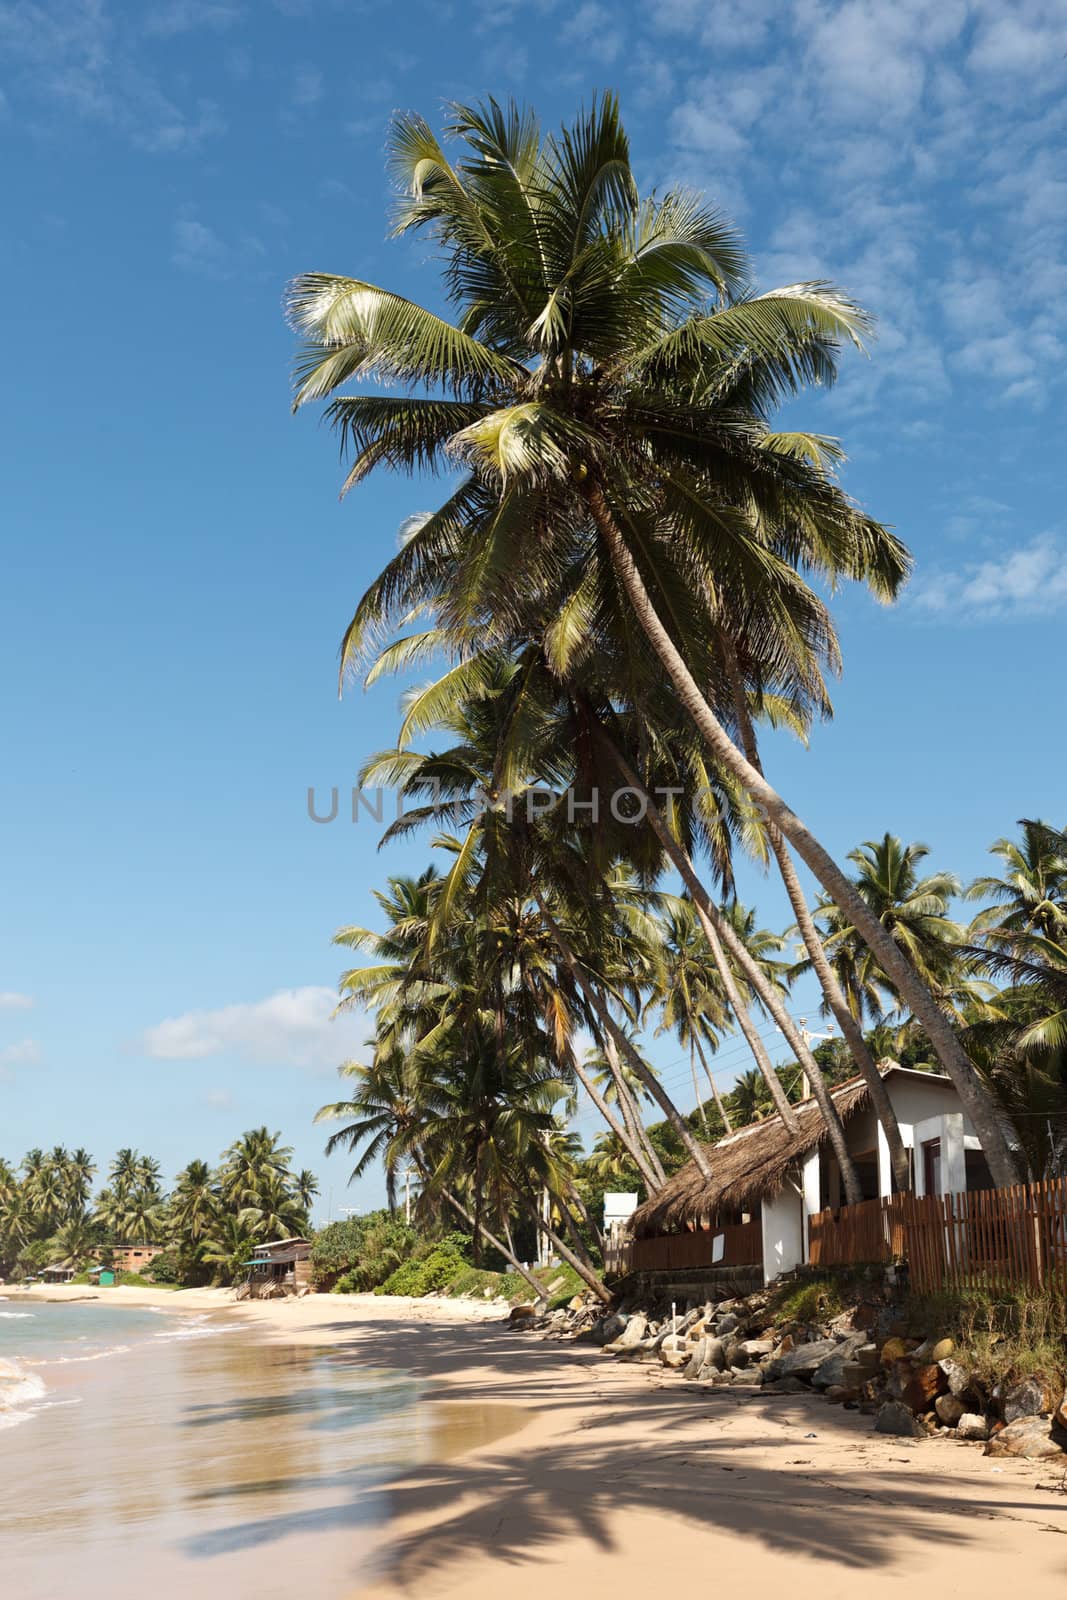 Idyllic beach with palm. Sri Lanka by dimol